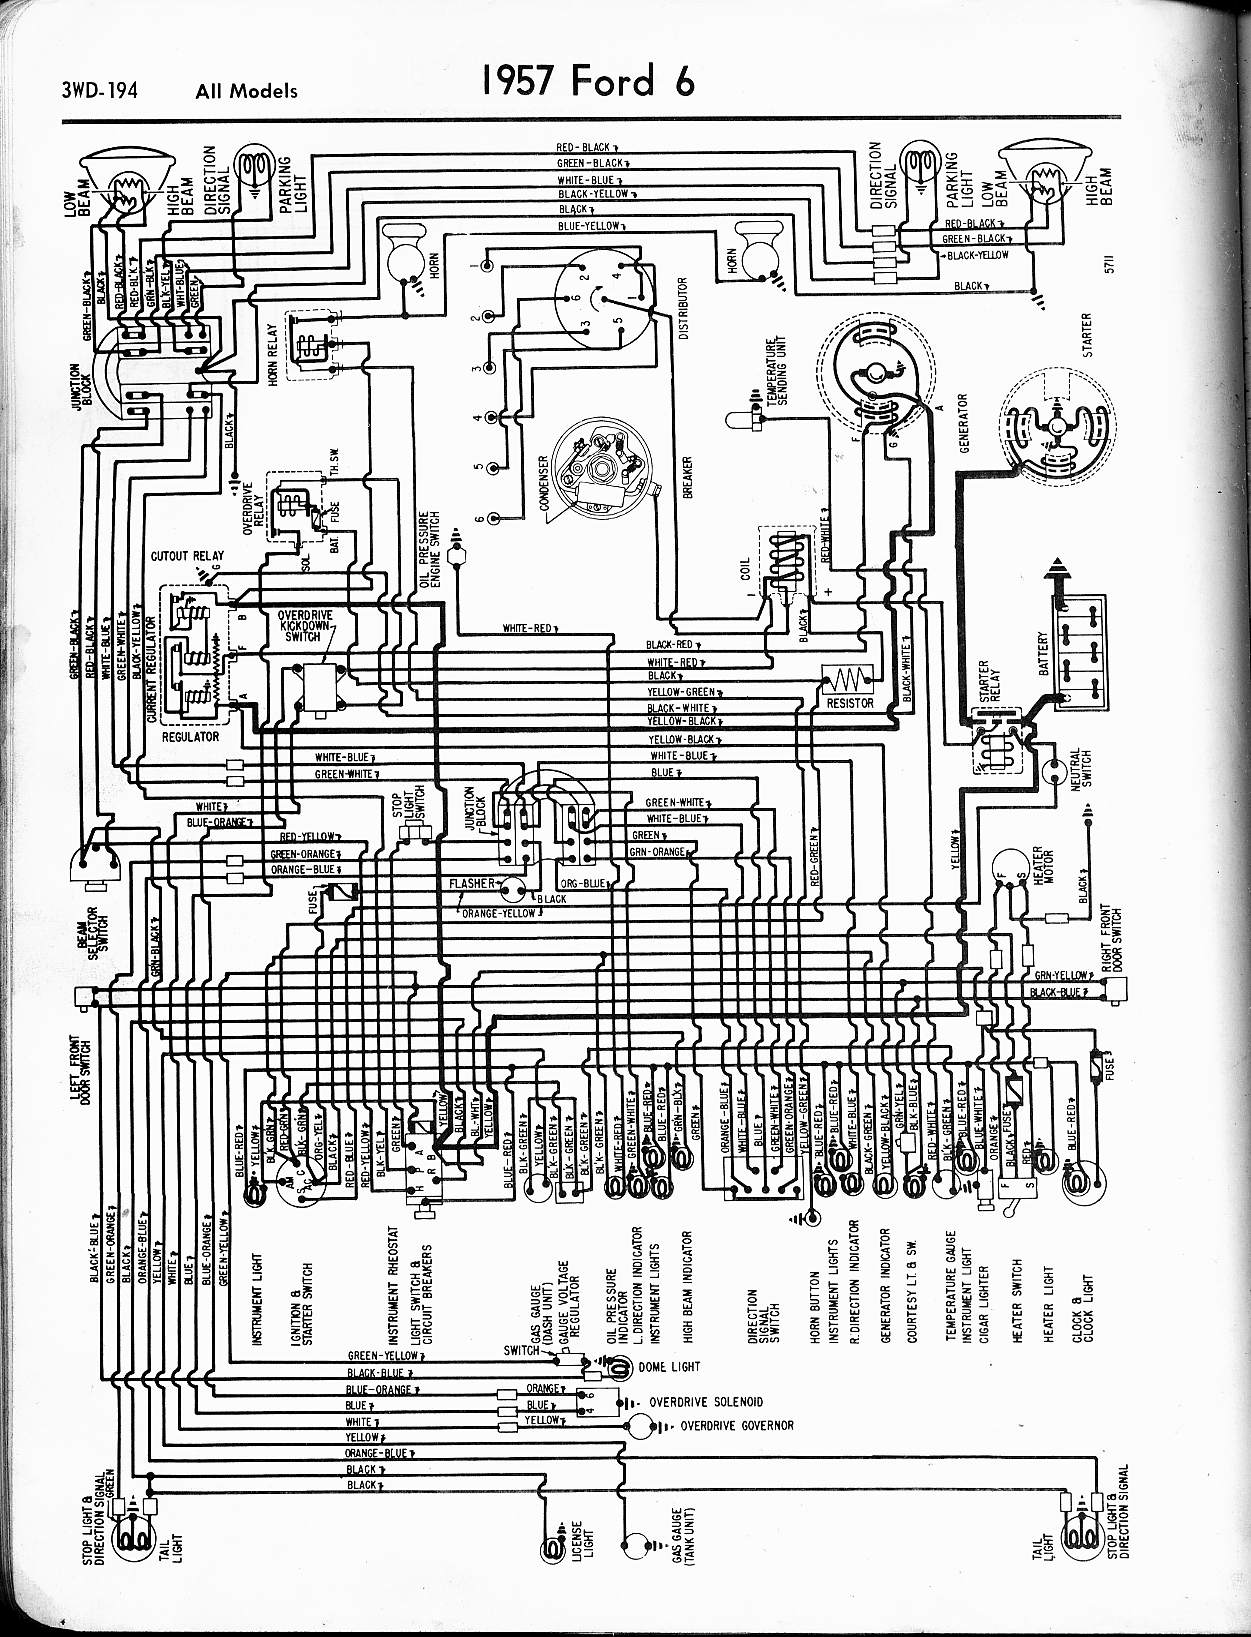 1957 Ford ranchero wiring diagram #2